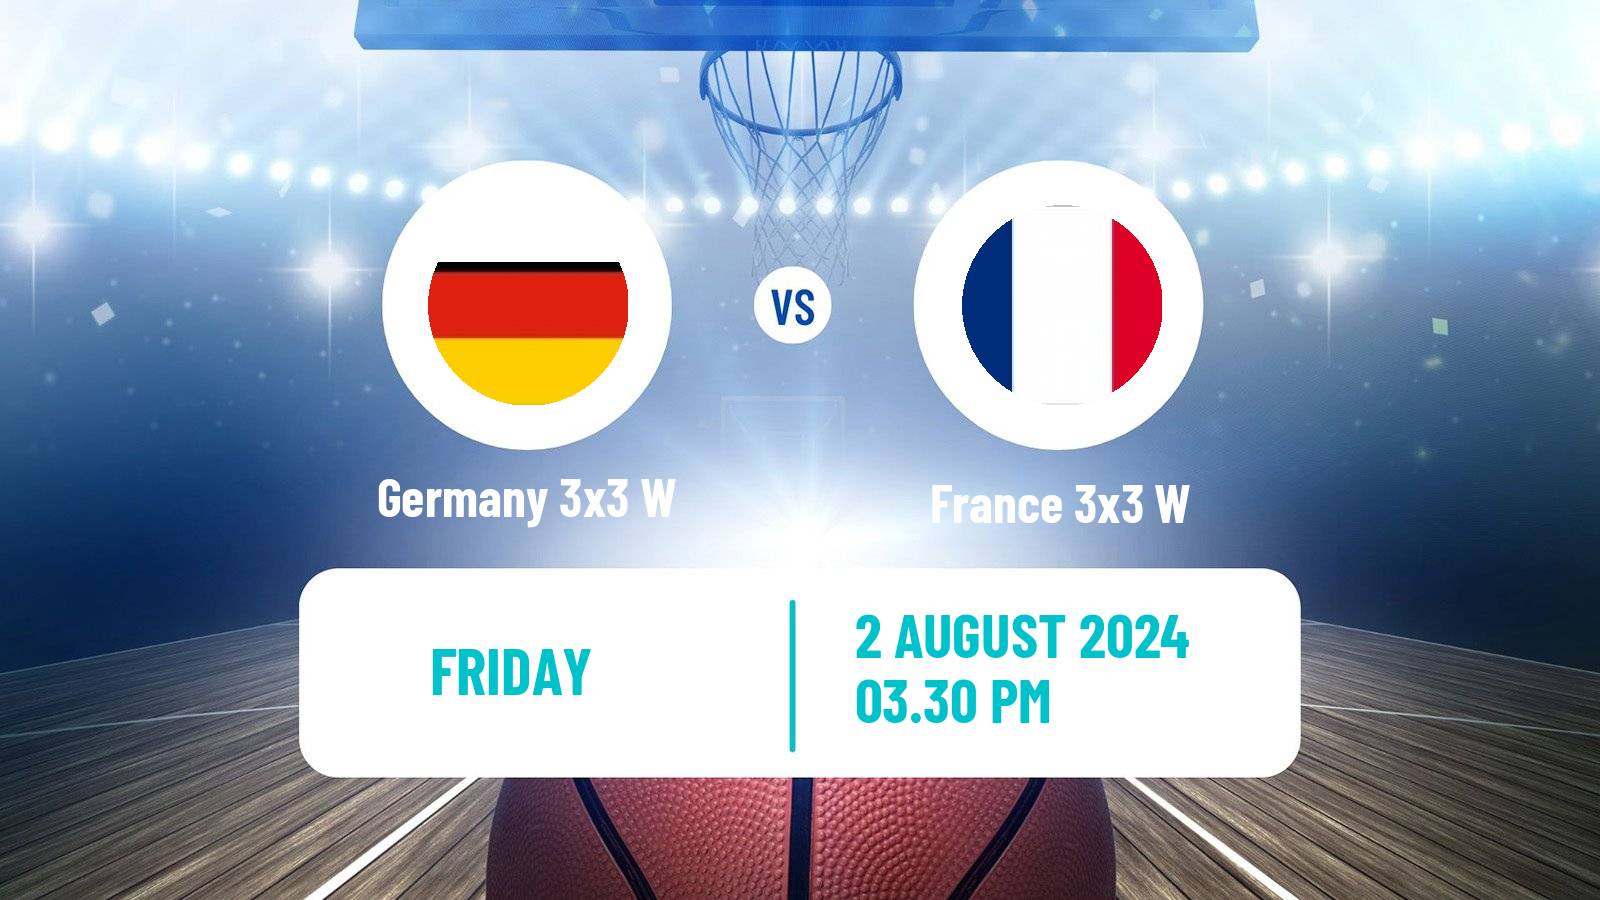 Basketball Olympic Games Basketball 3x3 Women Germany 3x3 W - France 3x3 W